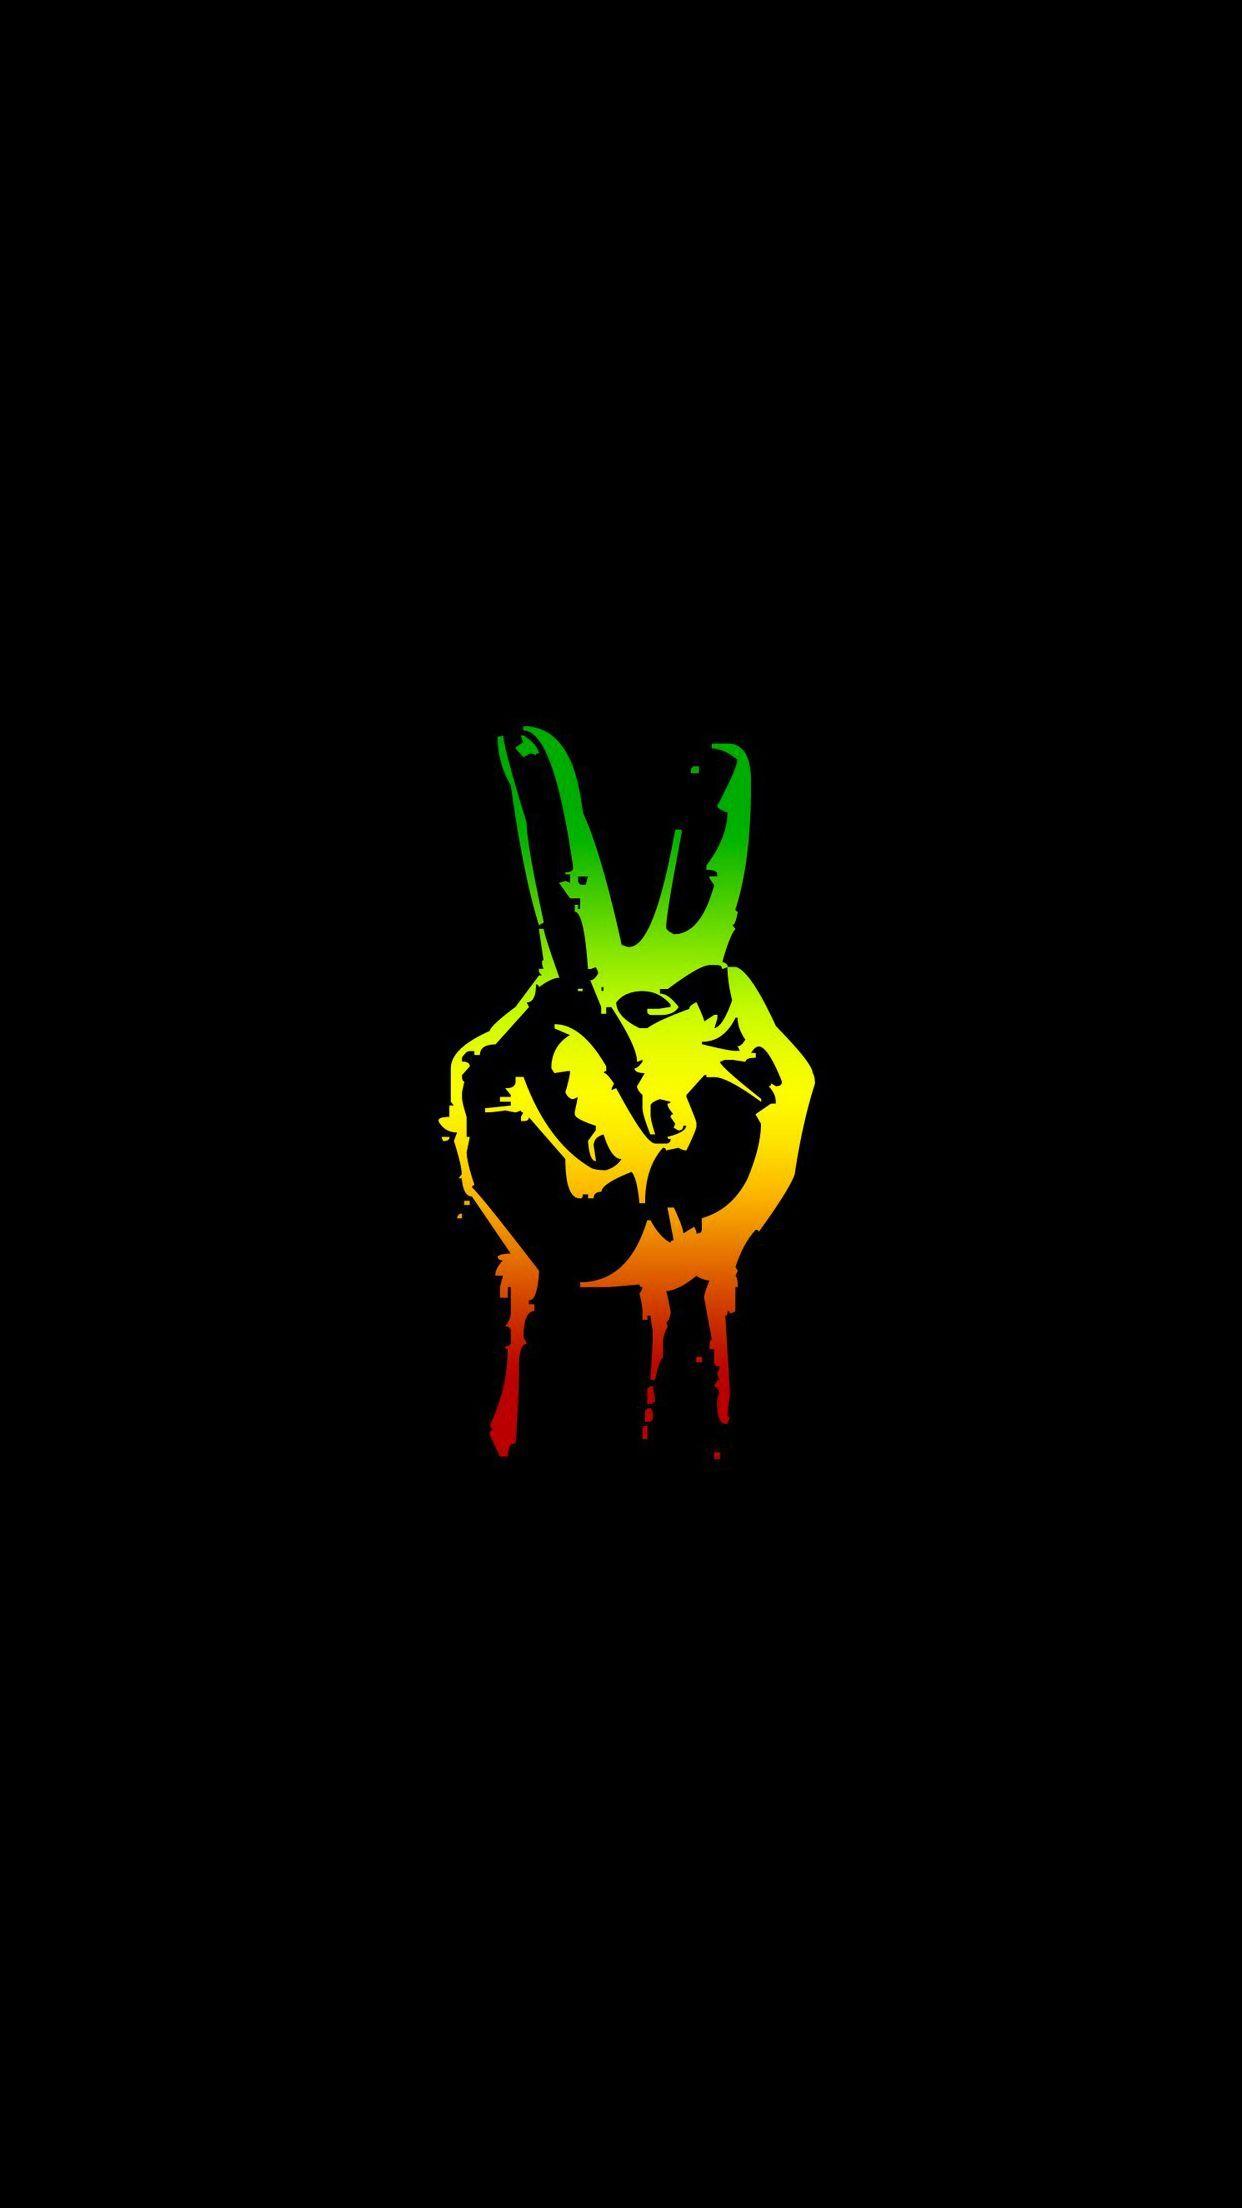 Reggae Logo - iPhone 4s Wallpaper Reggae Logo